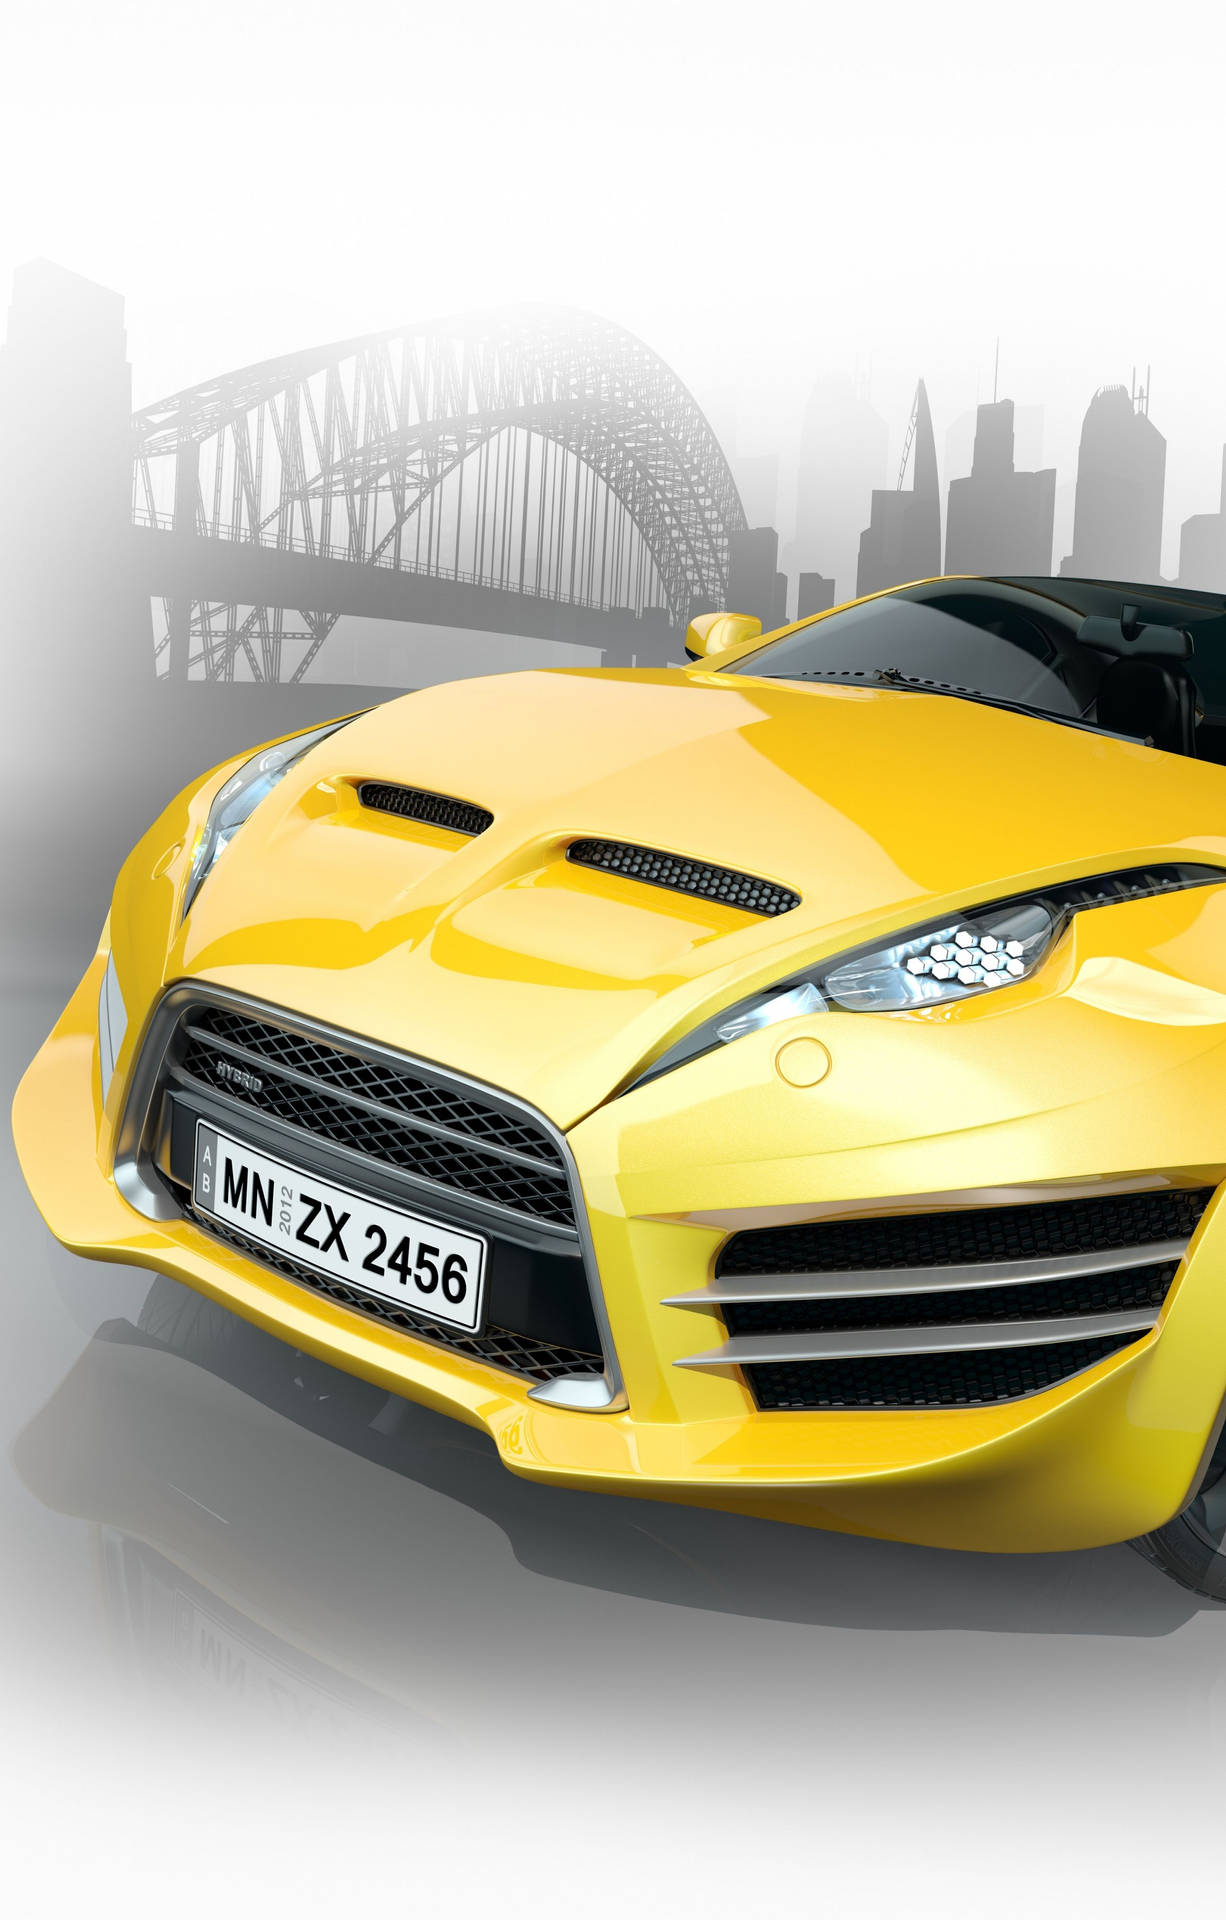 Sejl din vej i 4K med Lamborghini iPhone. Wallpaper